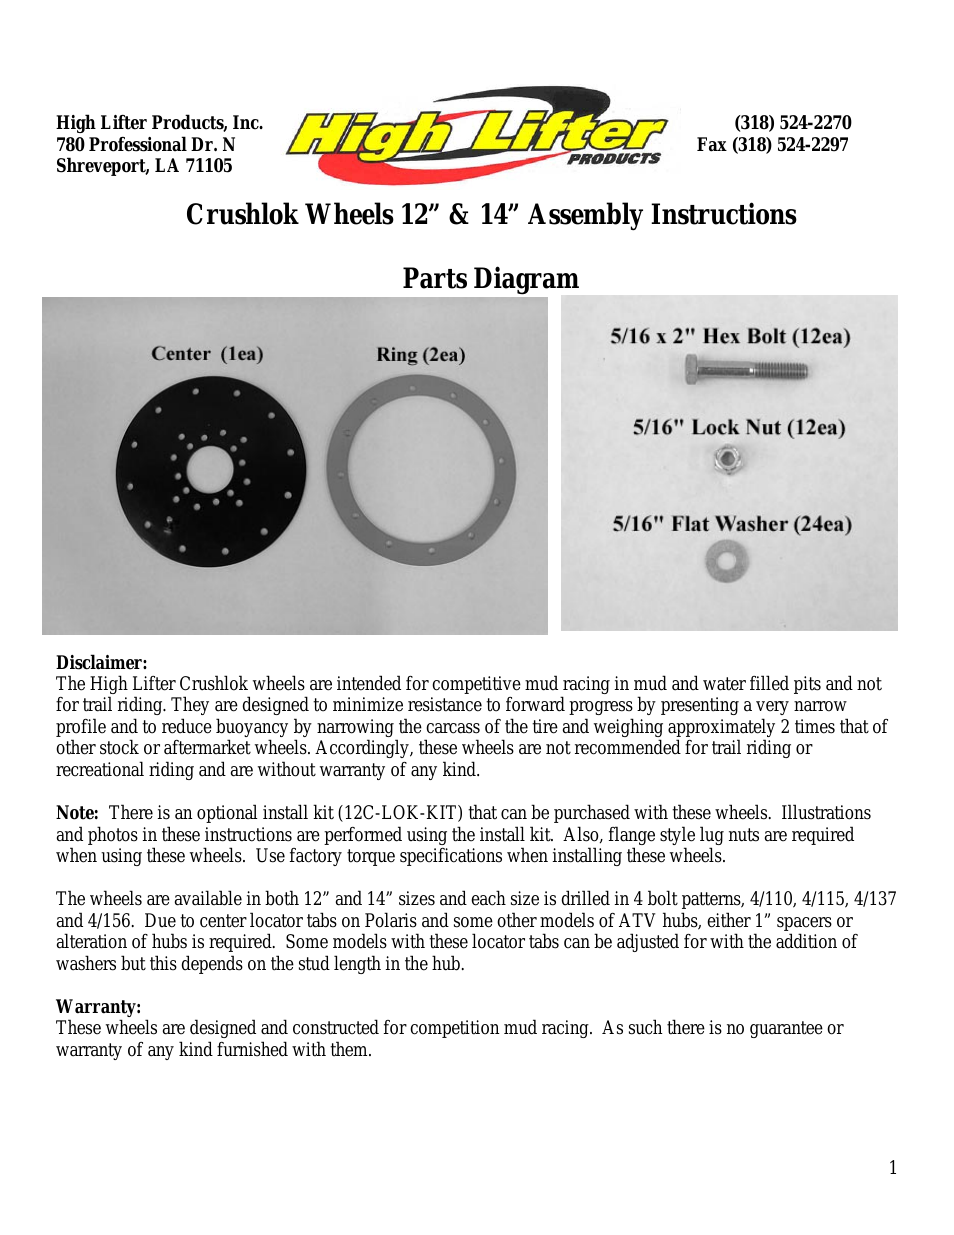 Crushlok Wheels 12” & 14” Installation